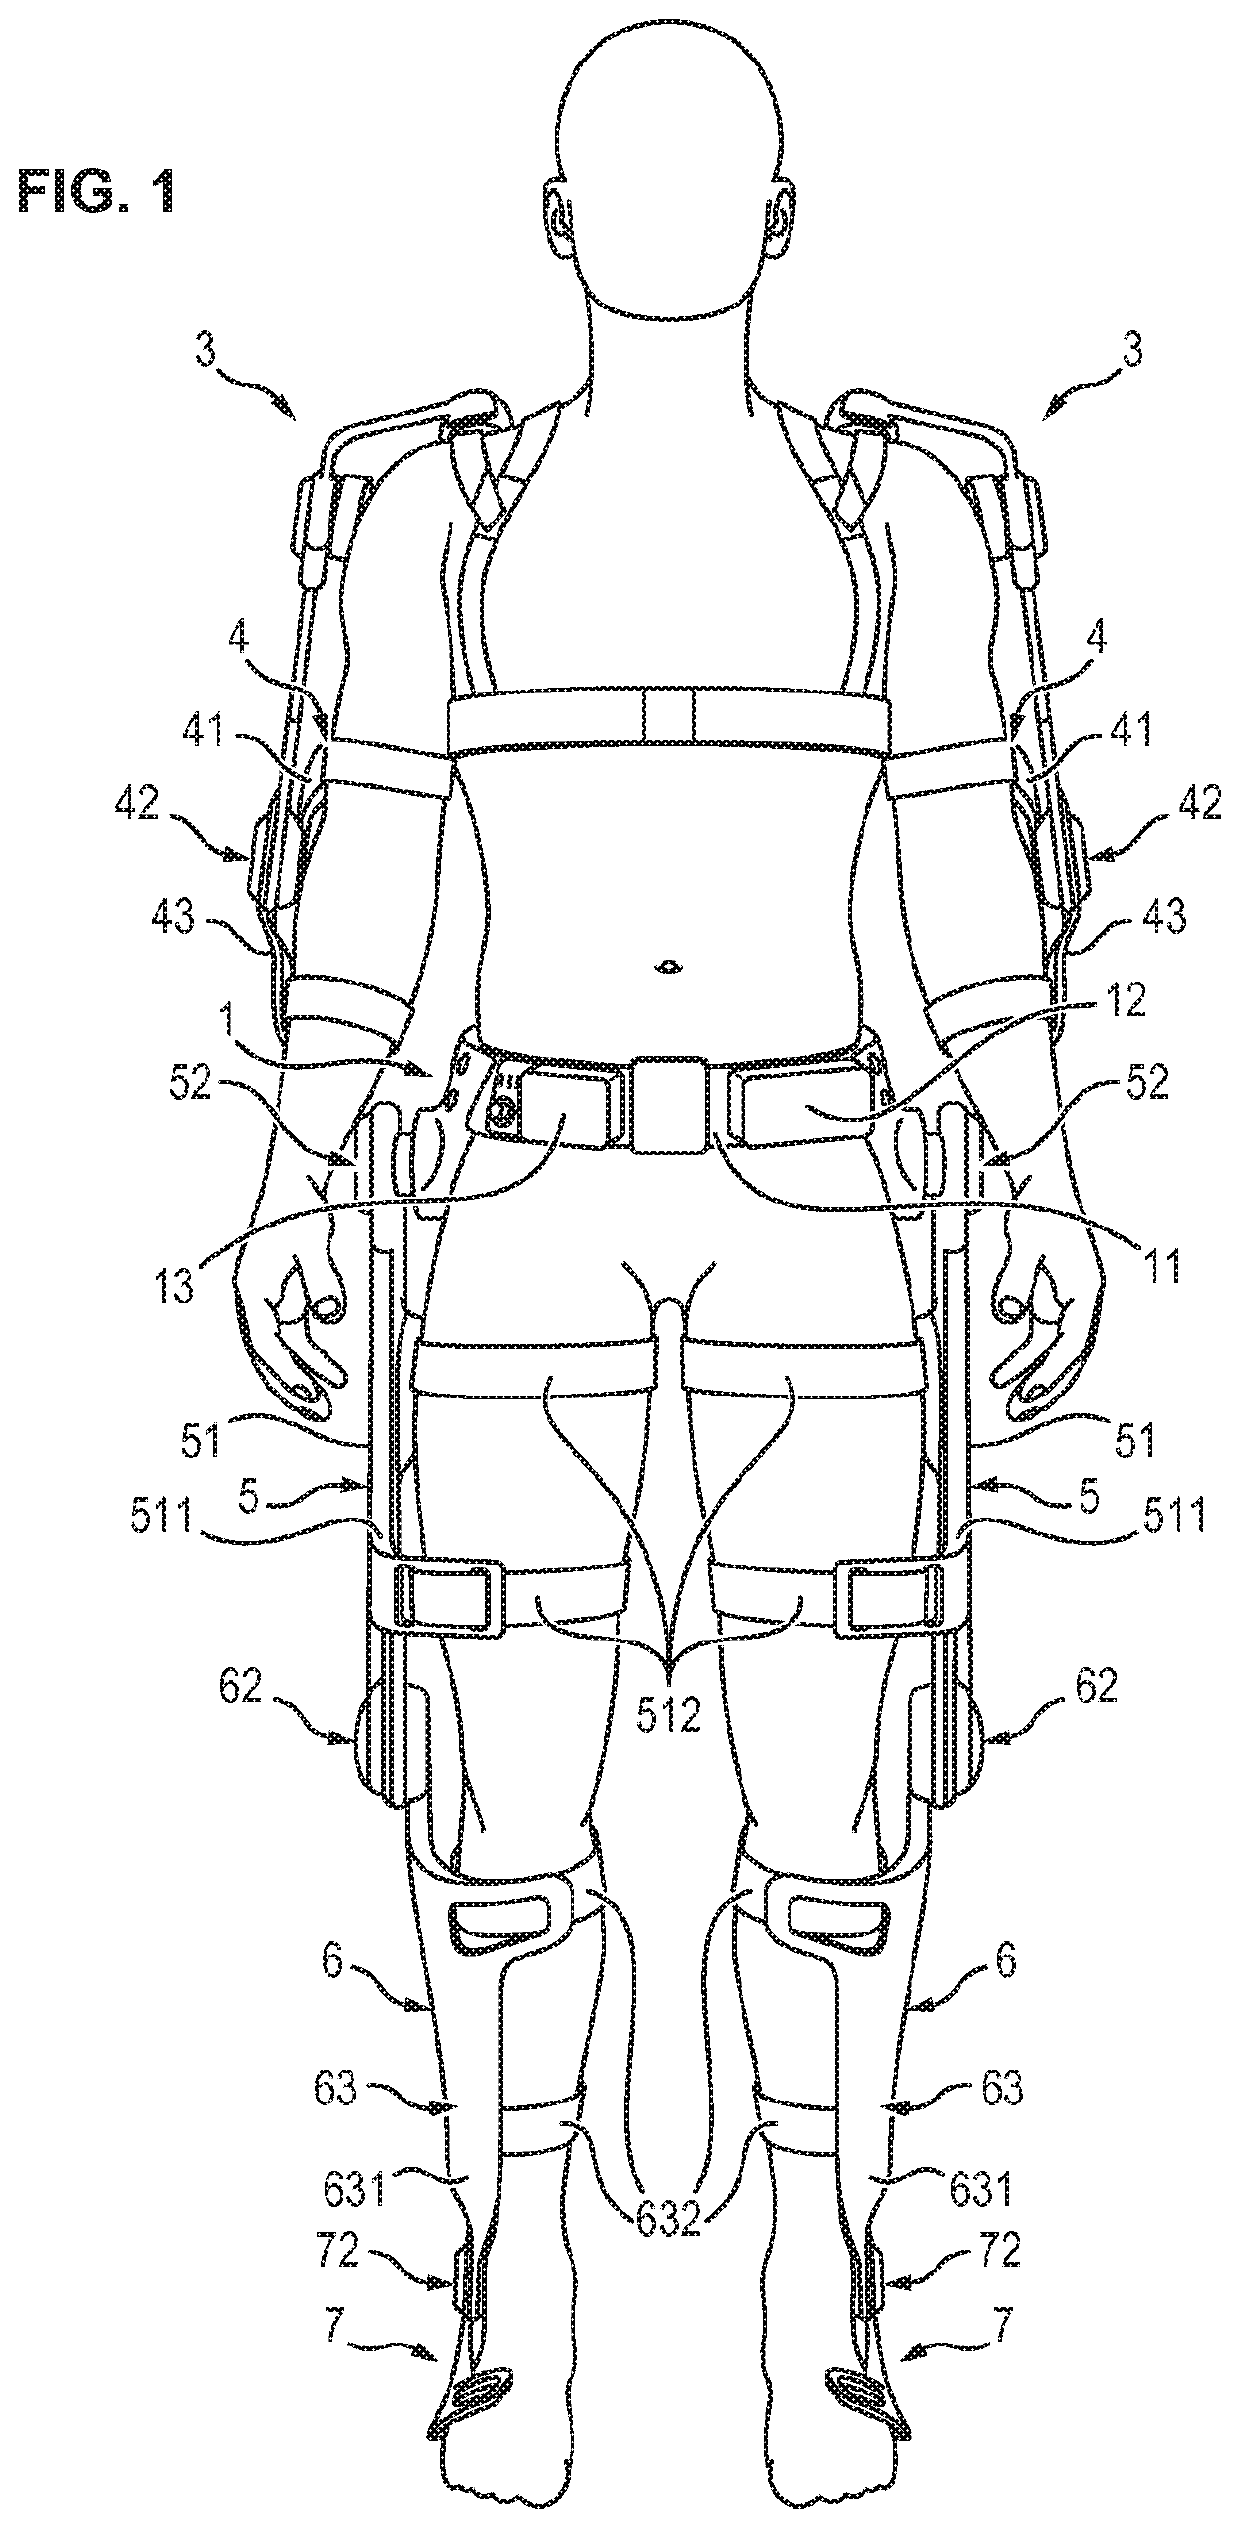 Shoulder module for an exoskeleton structure